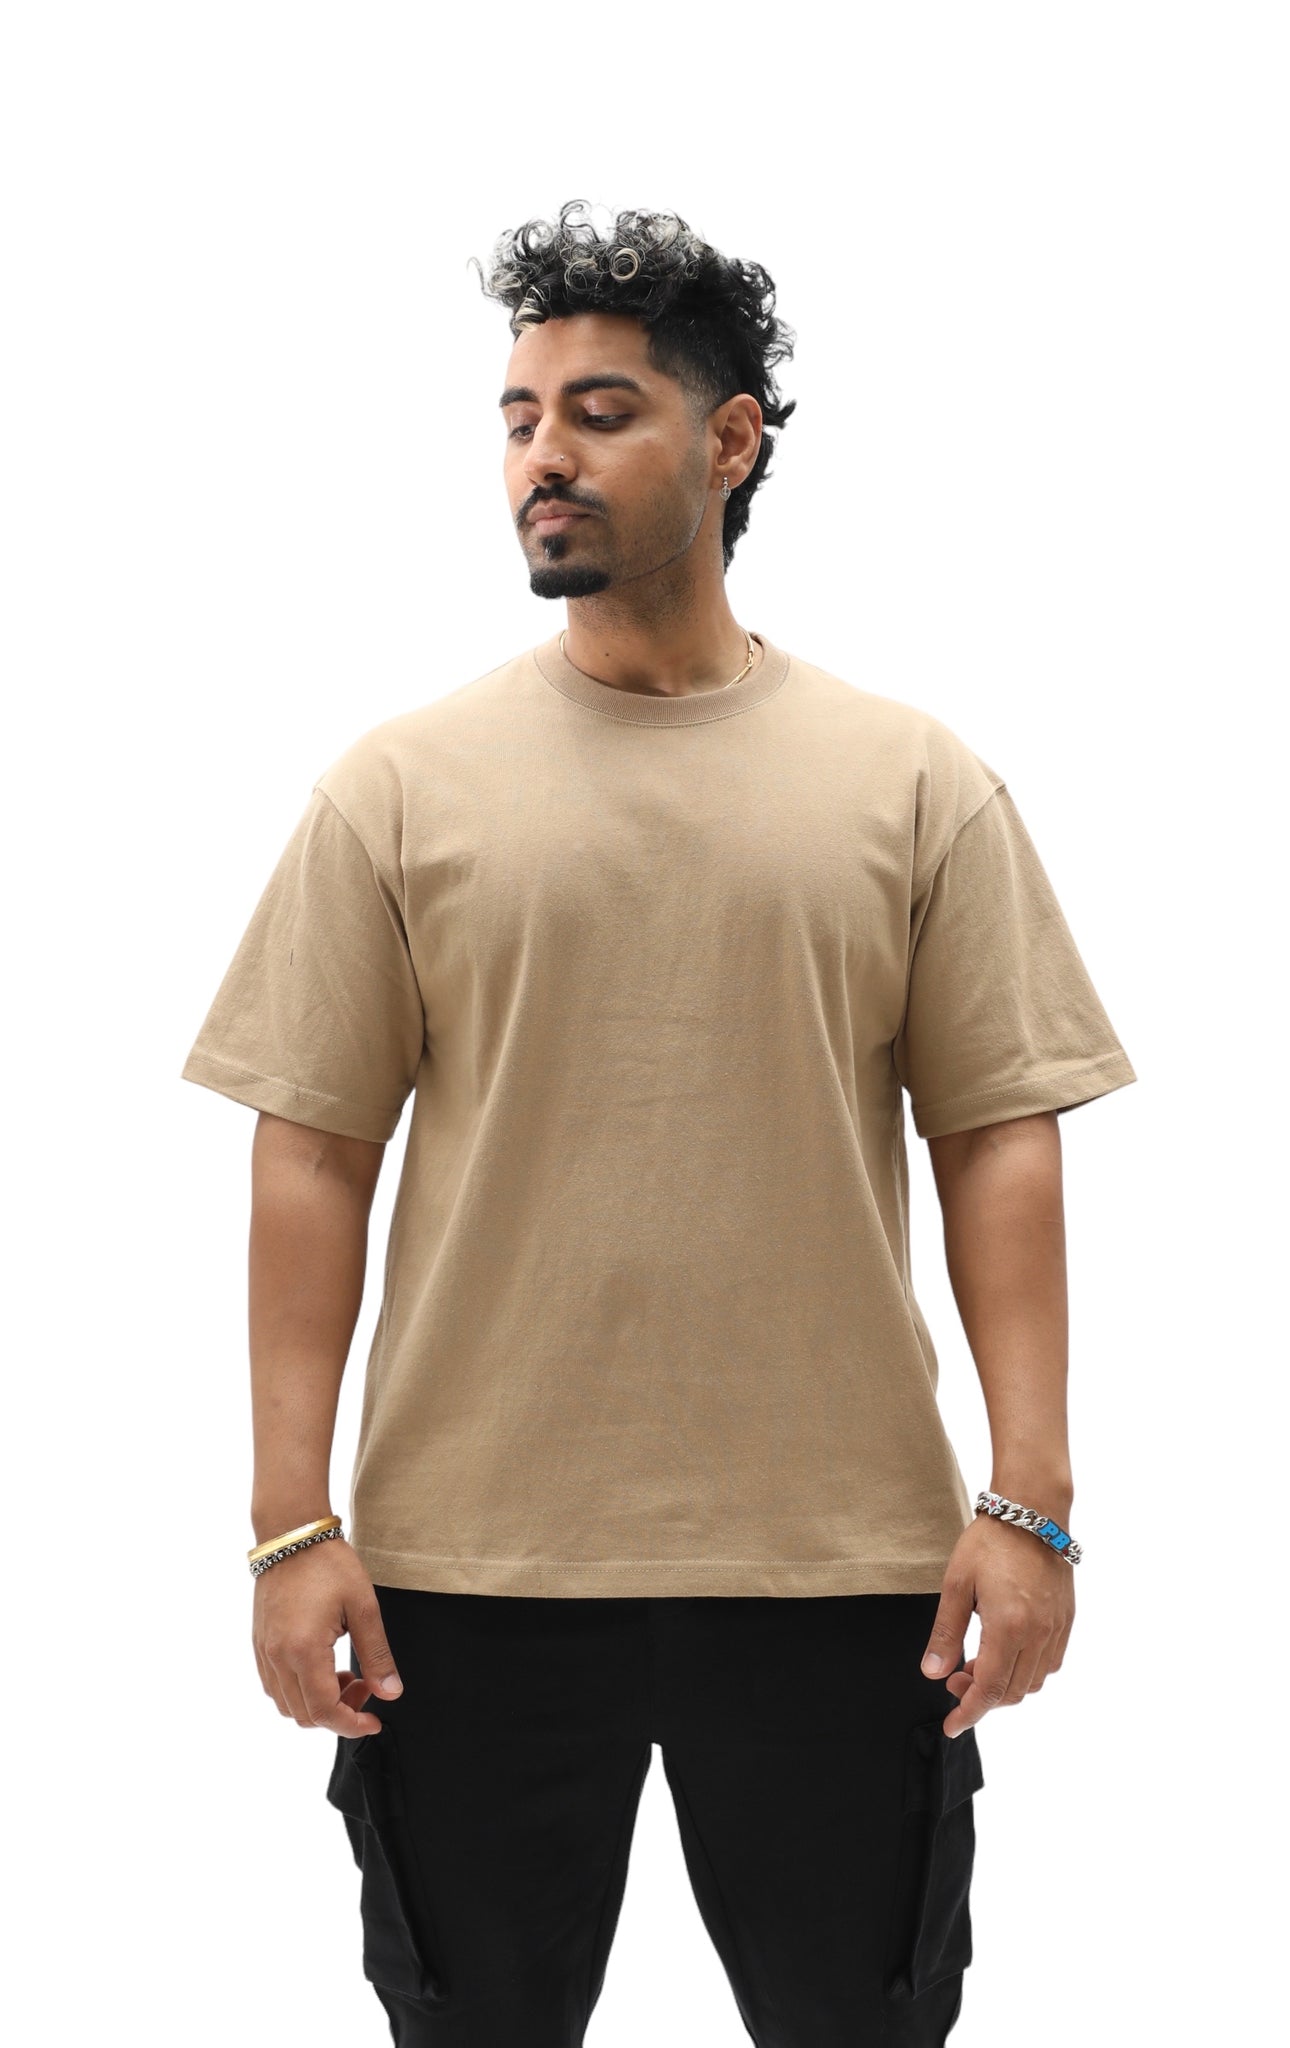 320 Heavy Cotton T-Shirt - Khaki